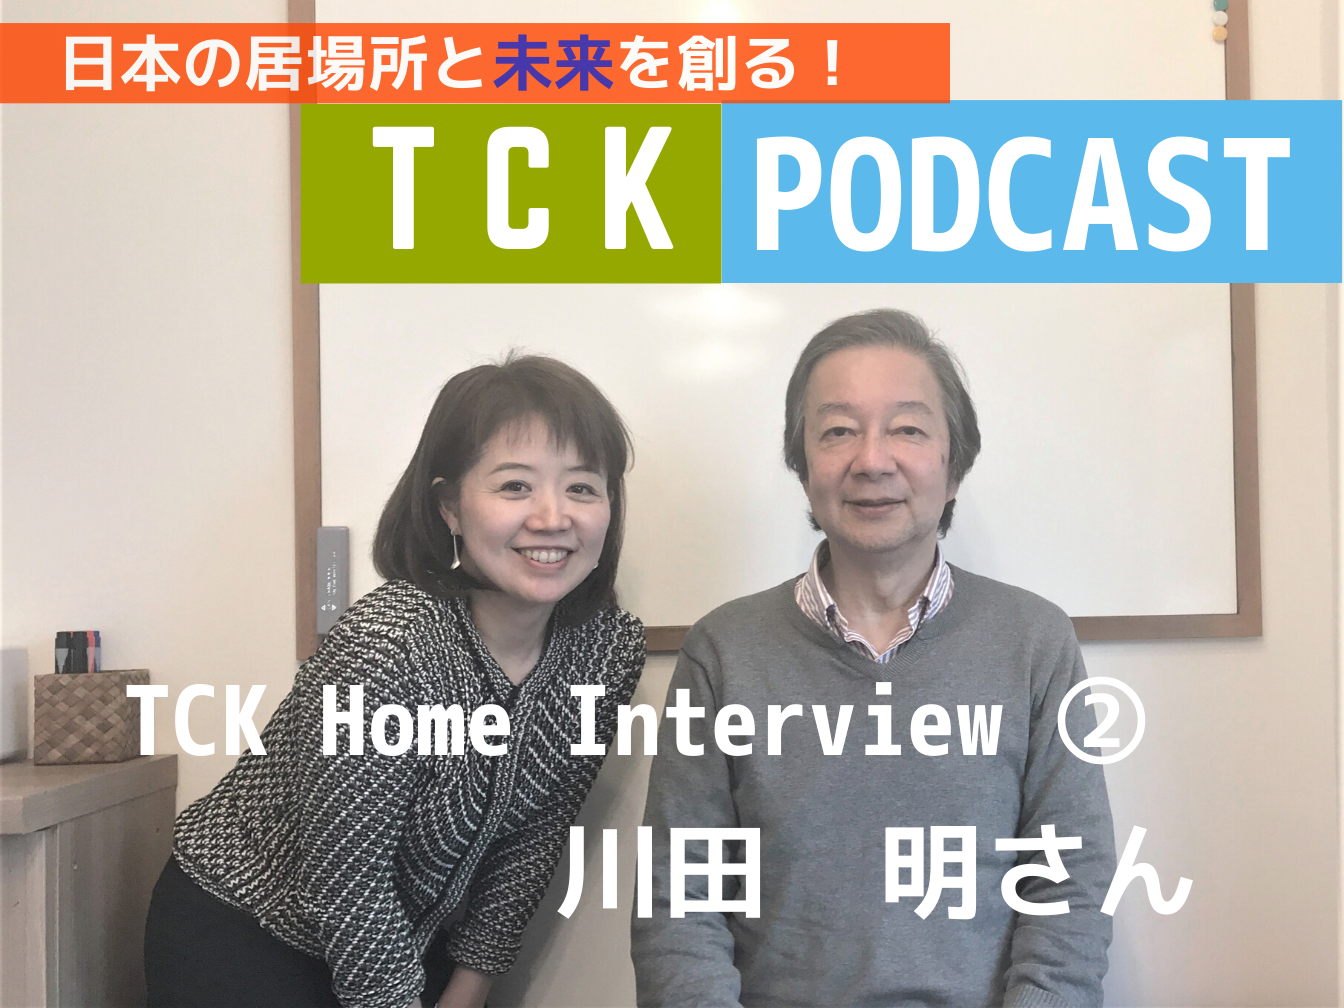 TCK interview by Cross